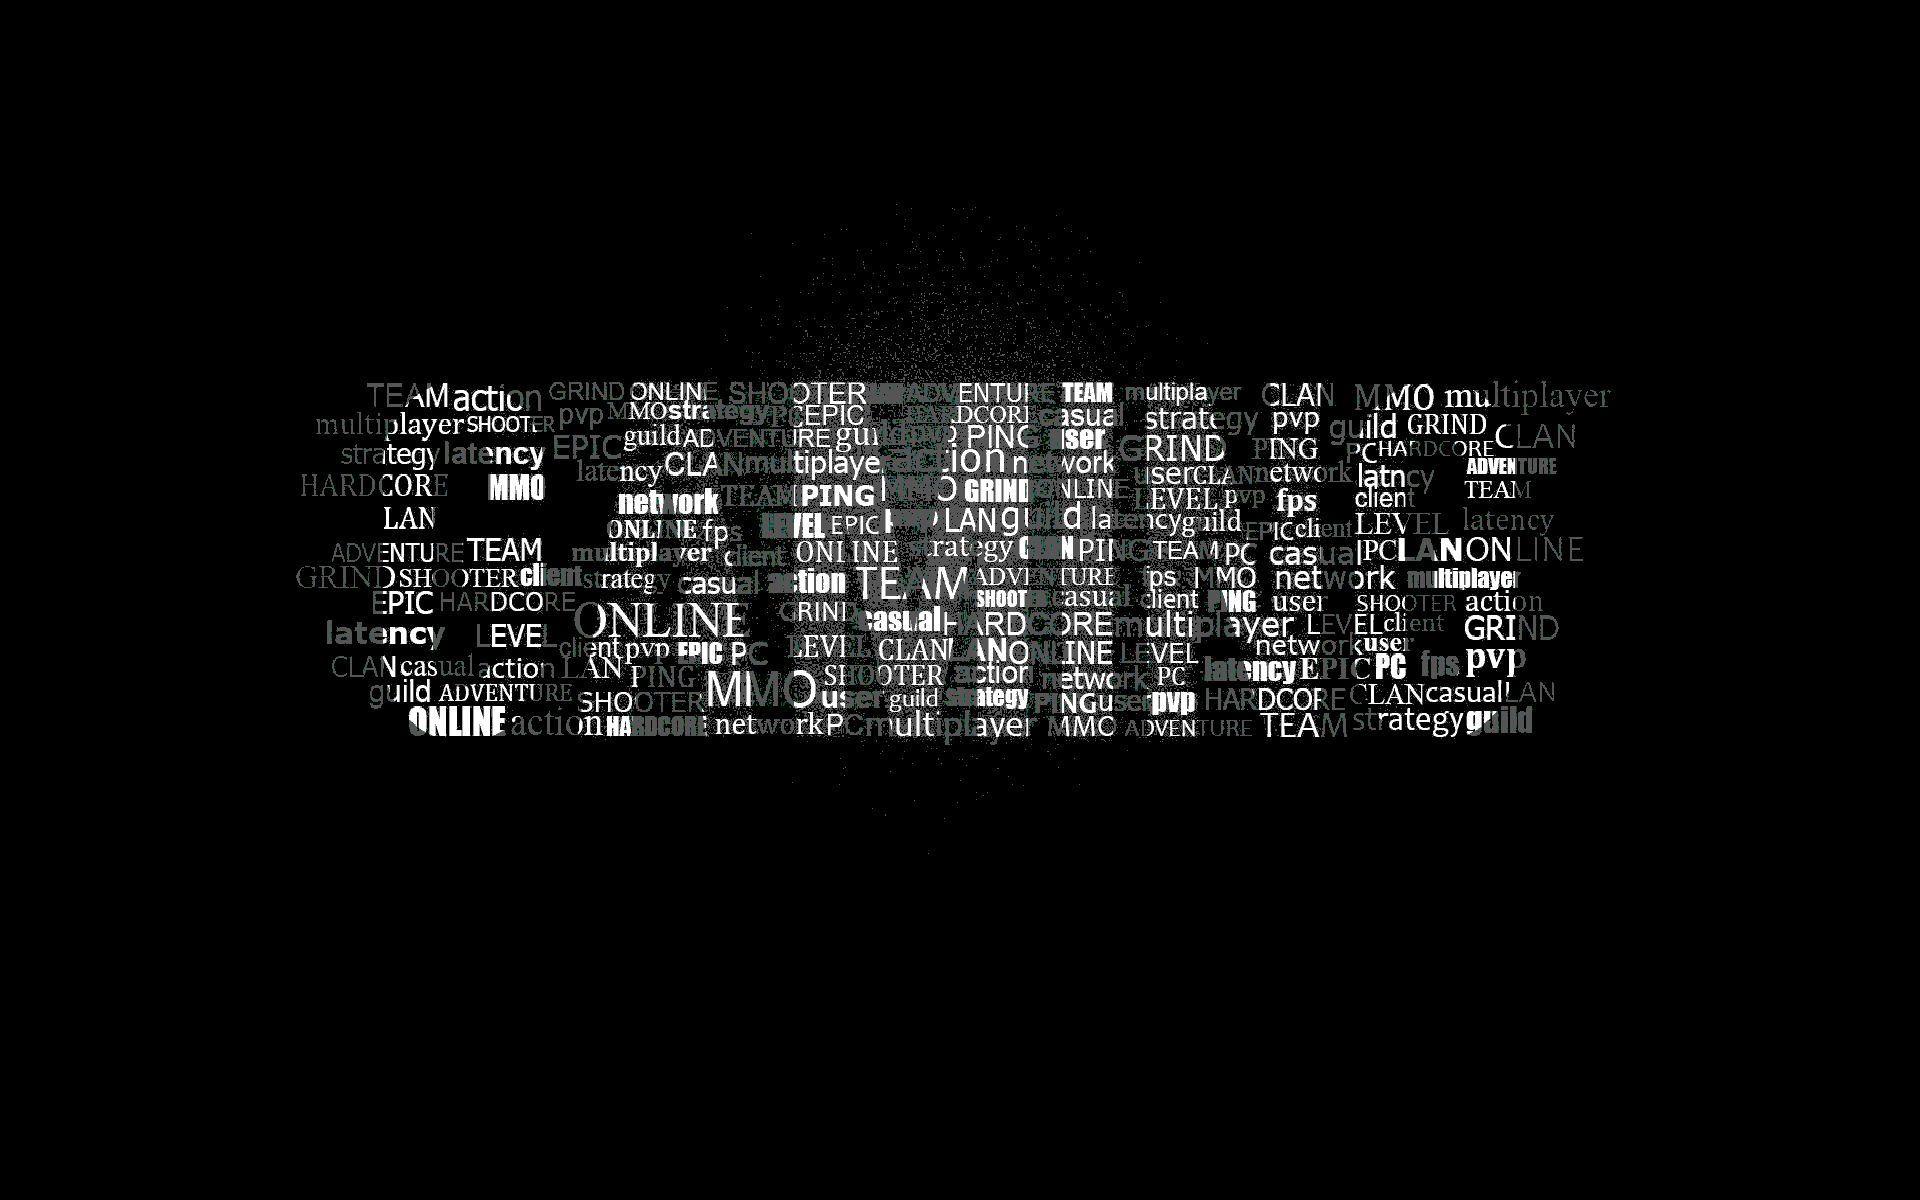 GAMING game video computer gamer poster wallpaperx1200